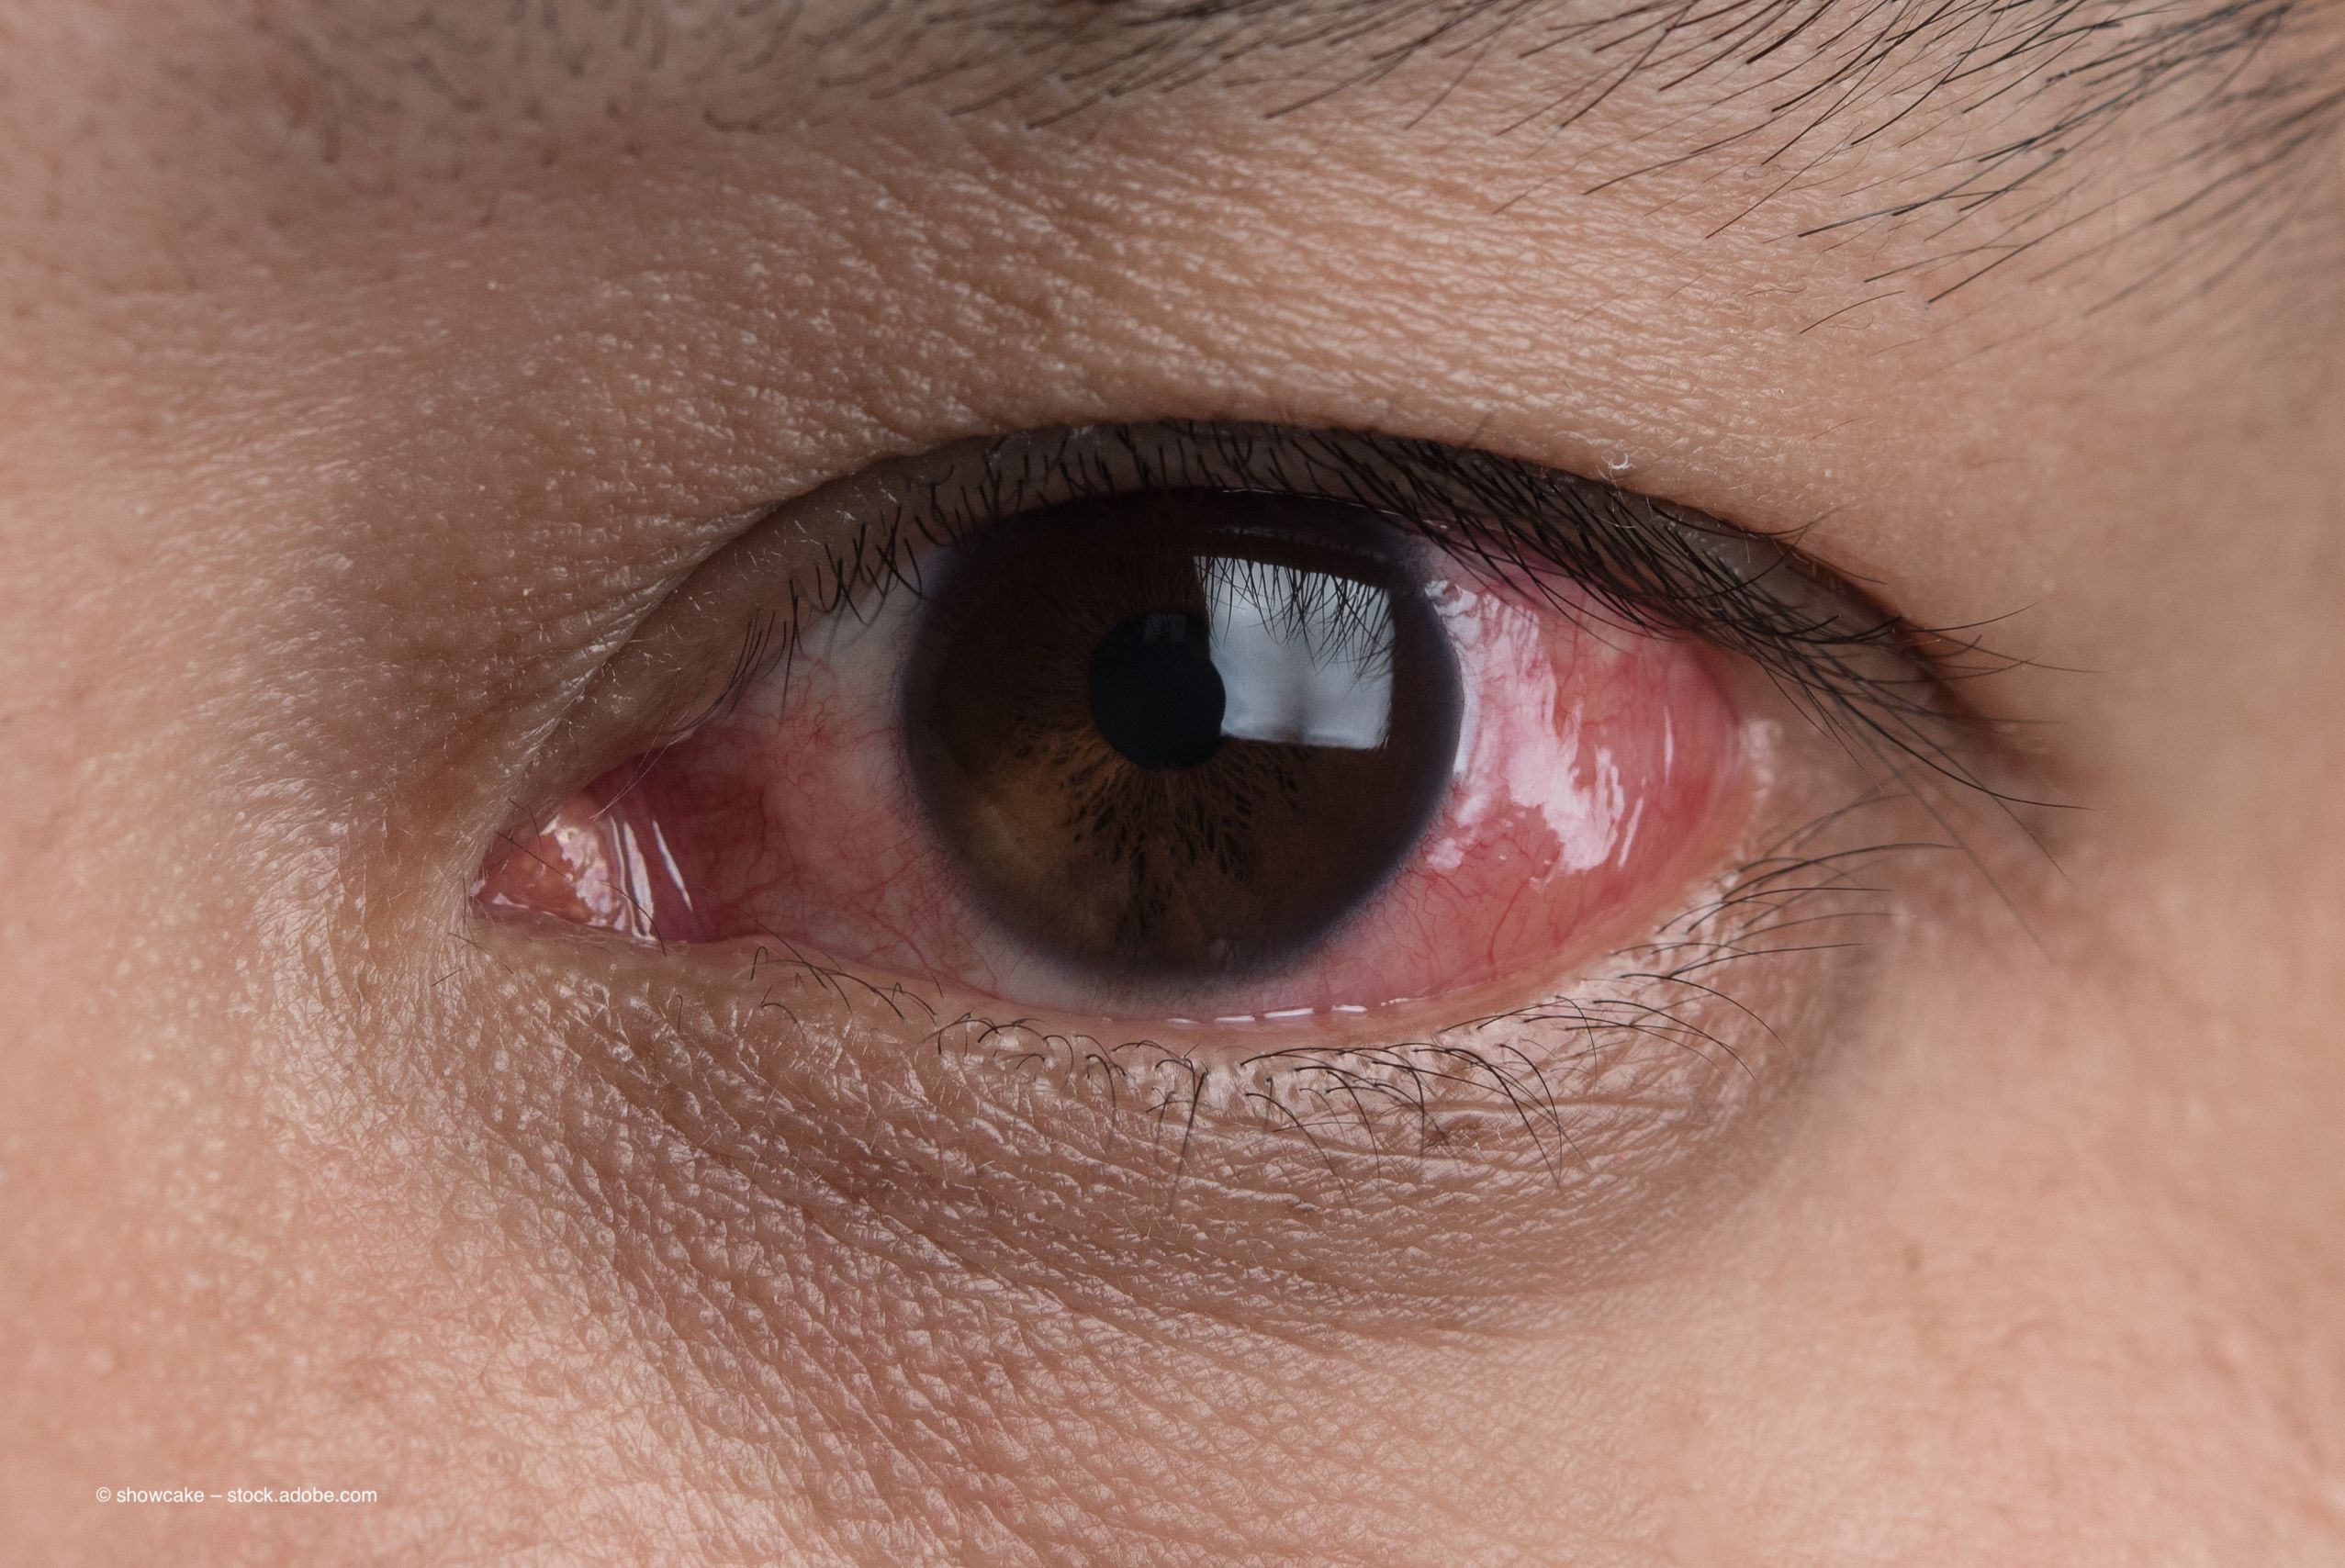 Study: potential biologic may treat allergic eye disease